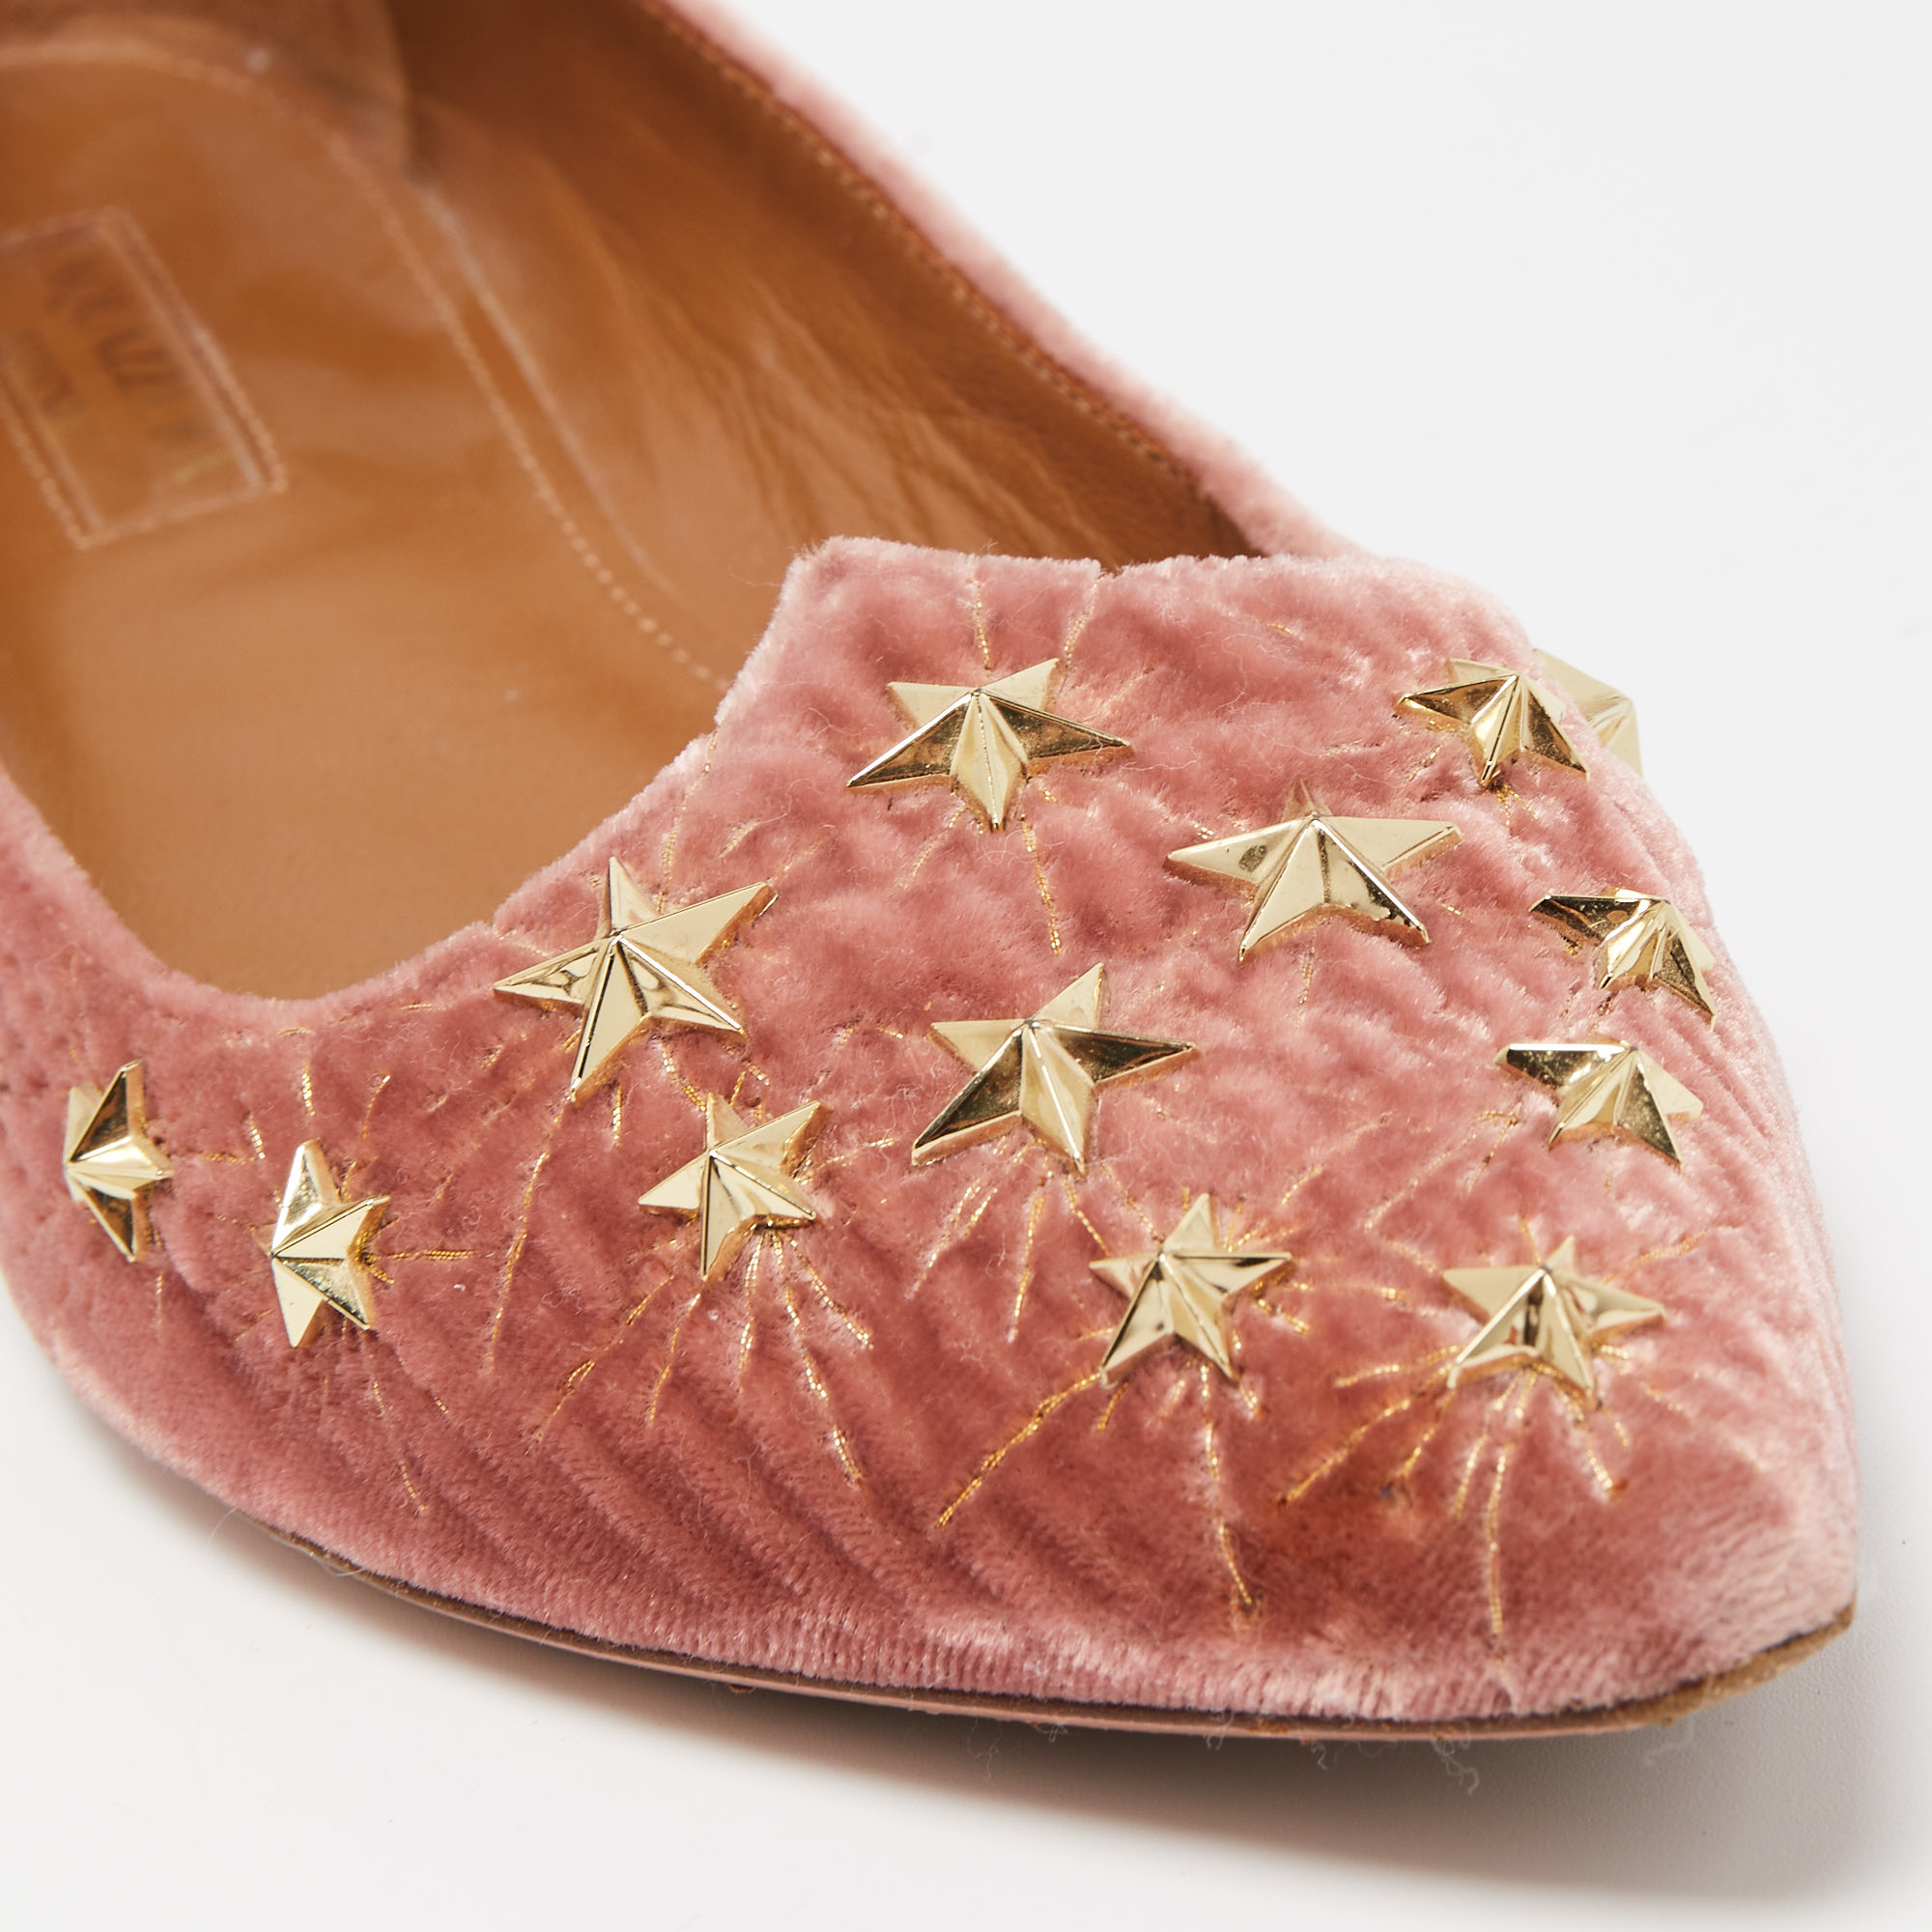 Aquazzura Pink Velvet Cosmic Star Ballet Flats Size 36